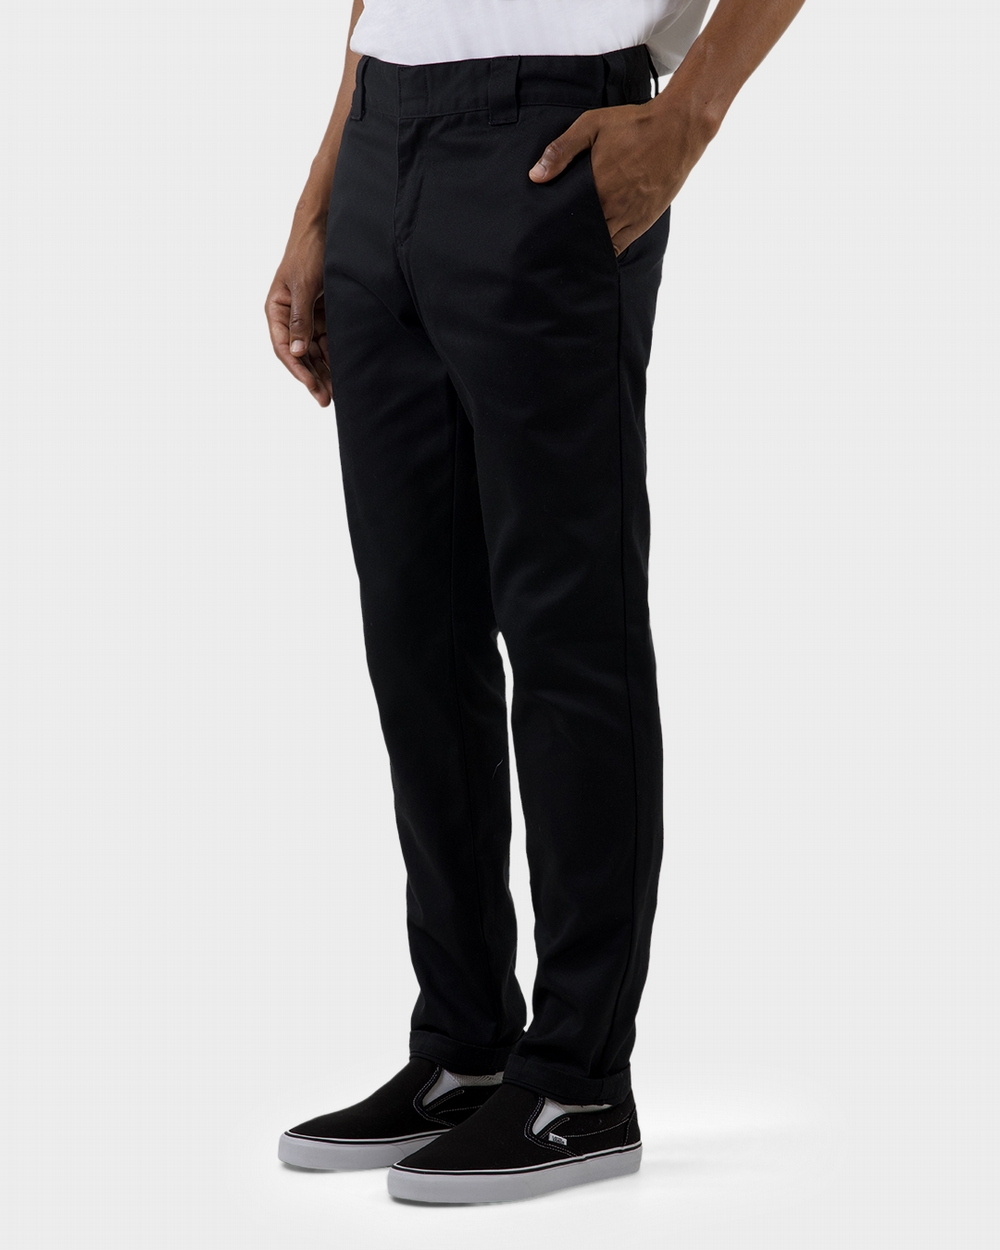 Men's Plaid Skinny Pencil Pants Business Formal Casual Slim Fit  Trousers Bottoms | eBay